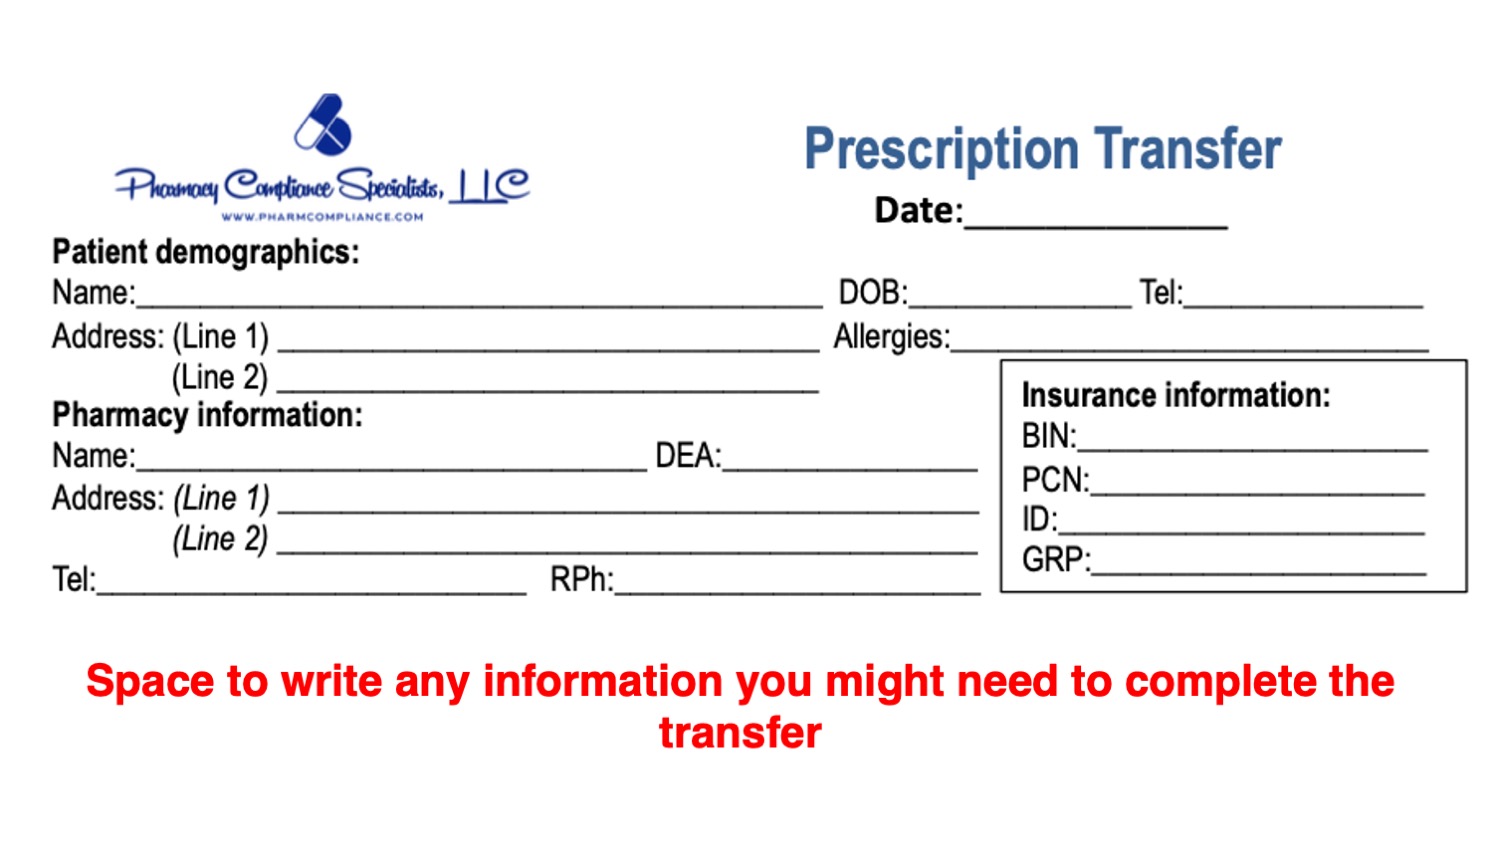 Prescription Transfer Form RxMarketplace